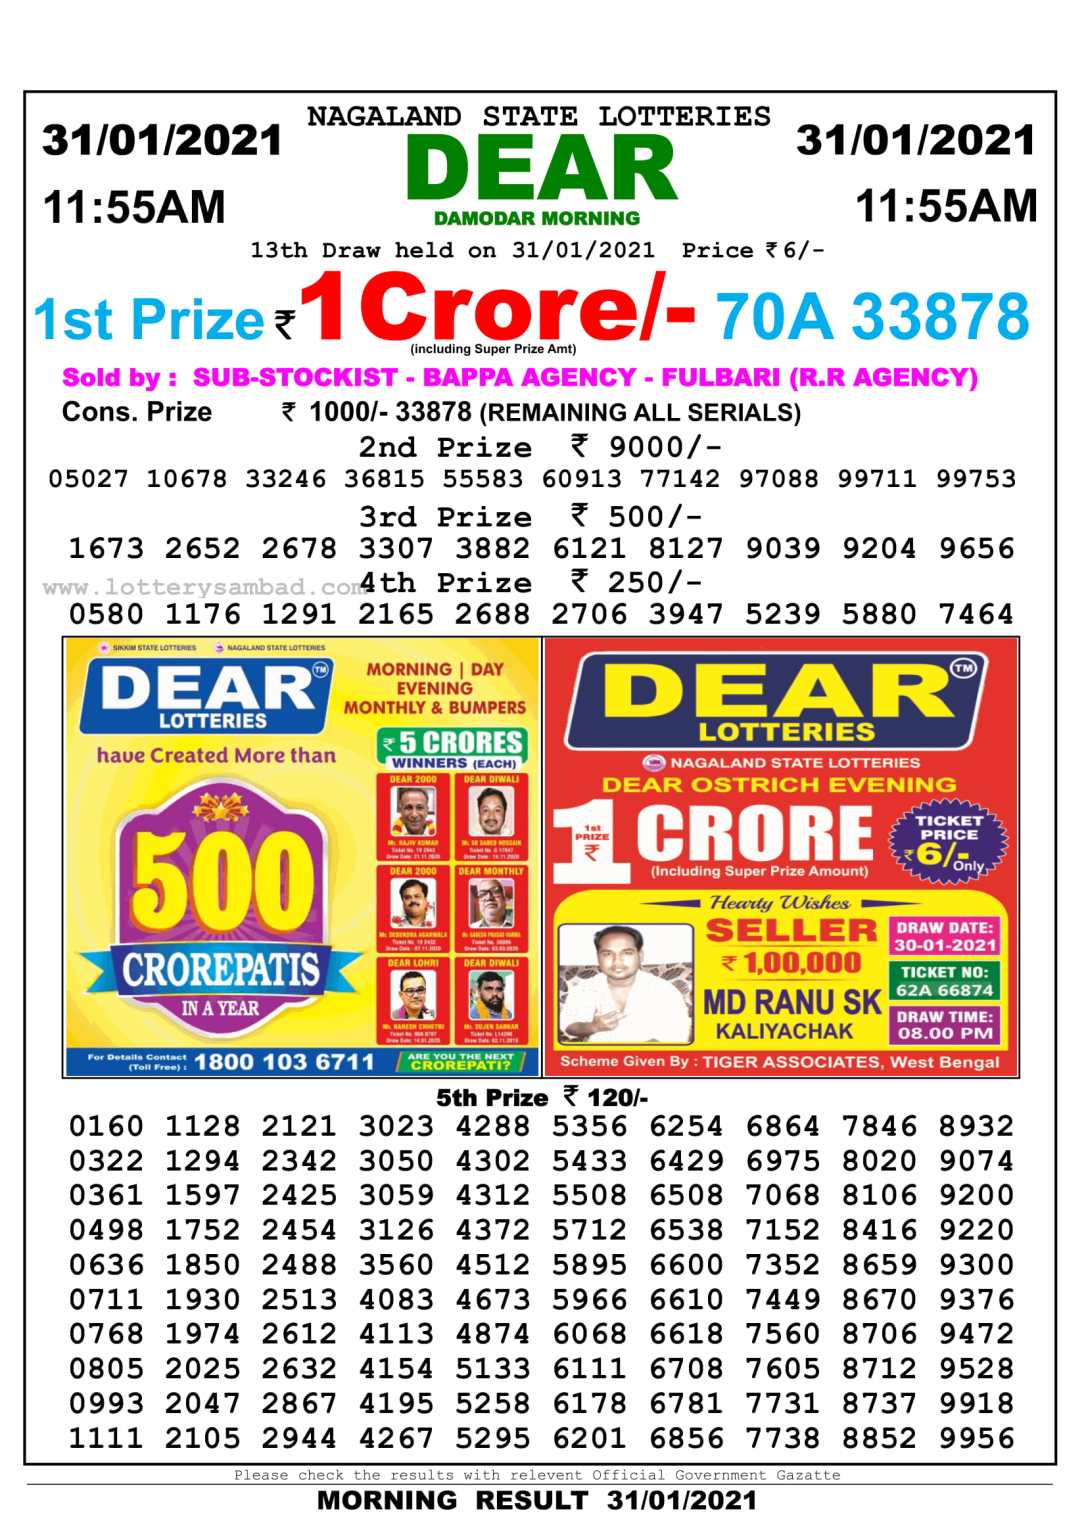 Dear Daily Lottery Result 11.55AM 31 Jan 2021